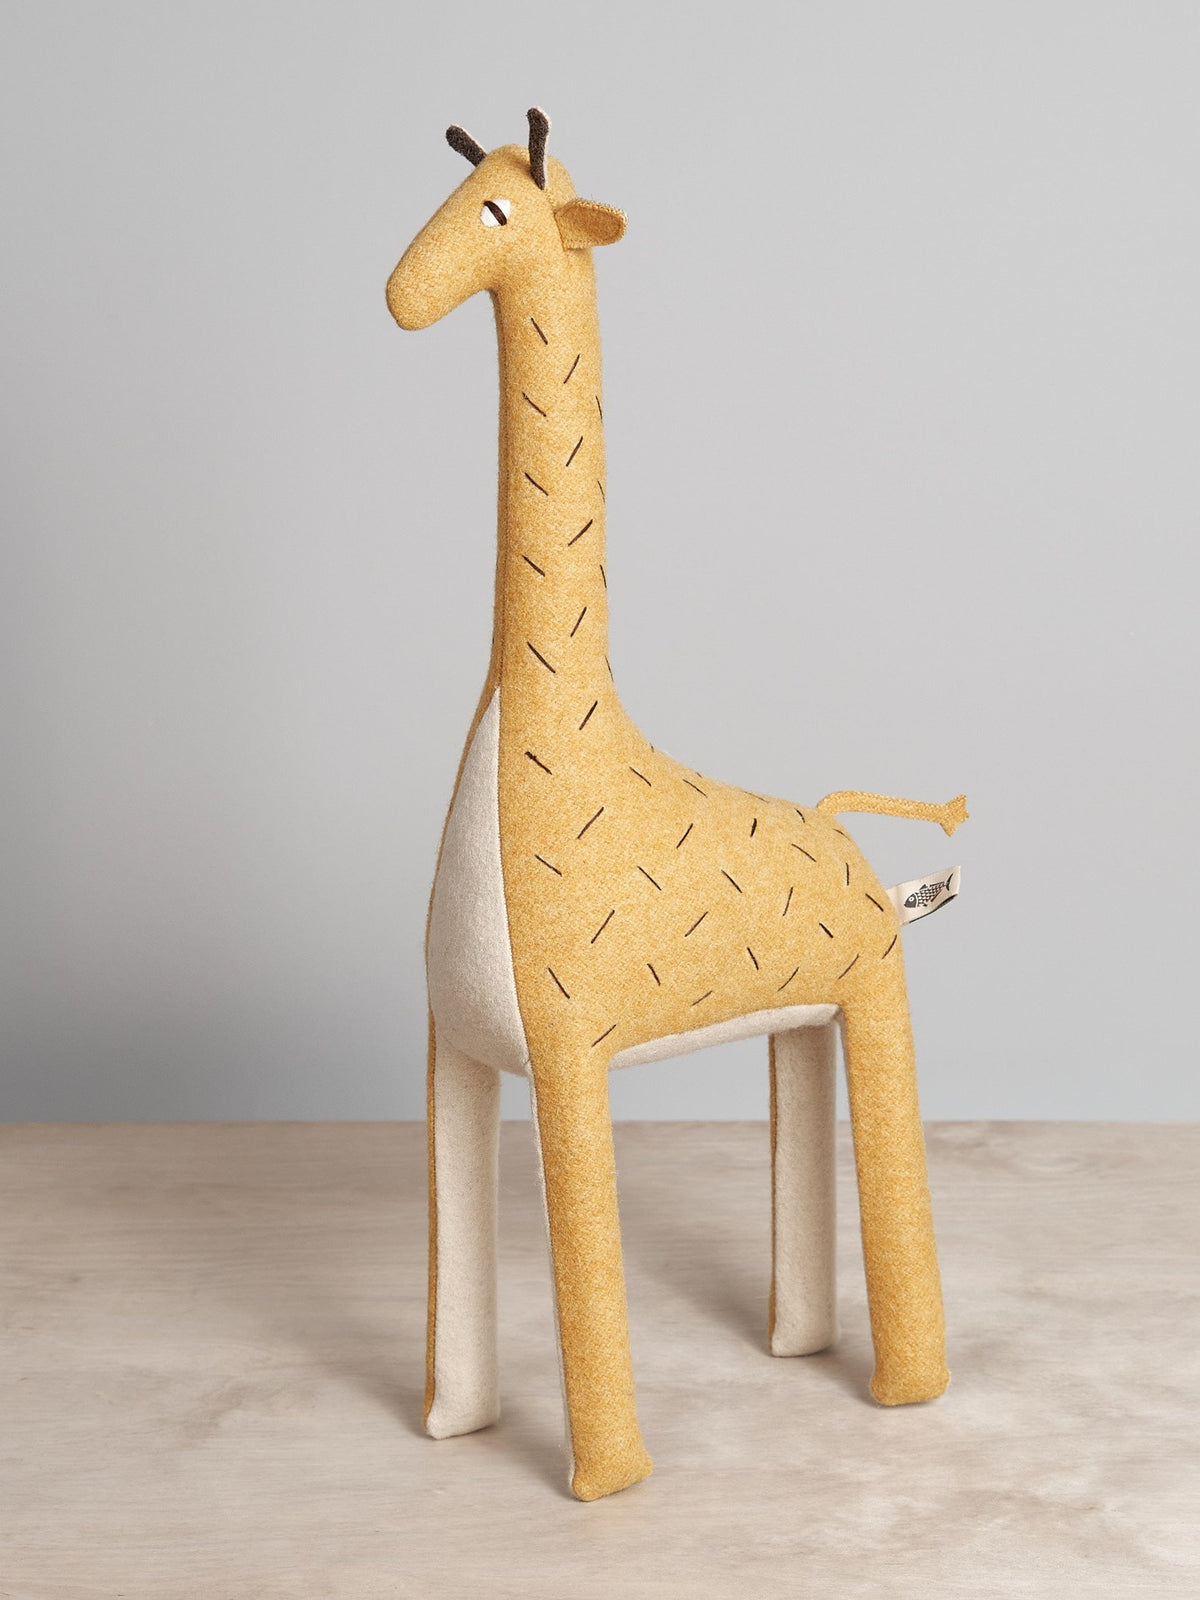 A ZIFFA, the Nubian giraffe, toy standing on a Carapau wooden surface.